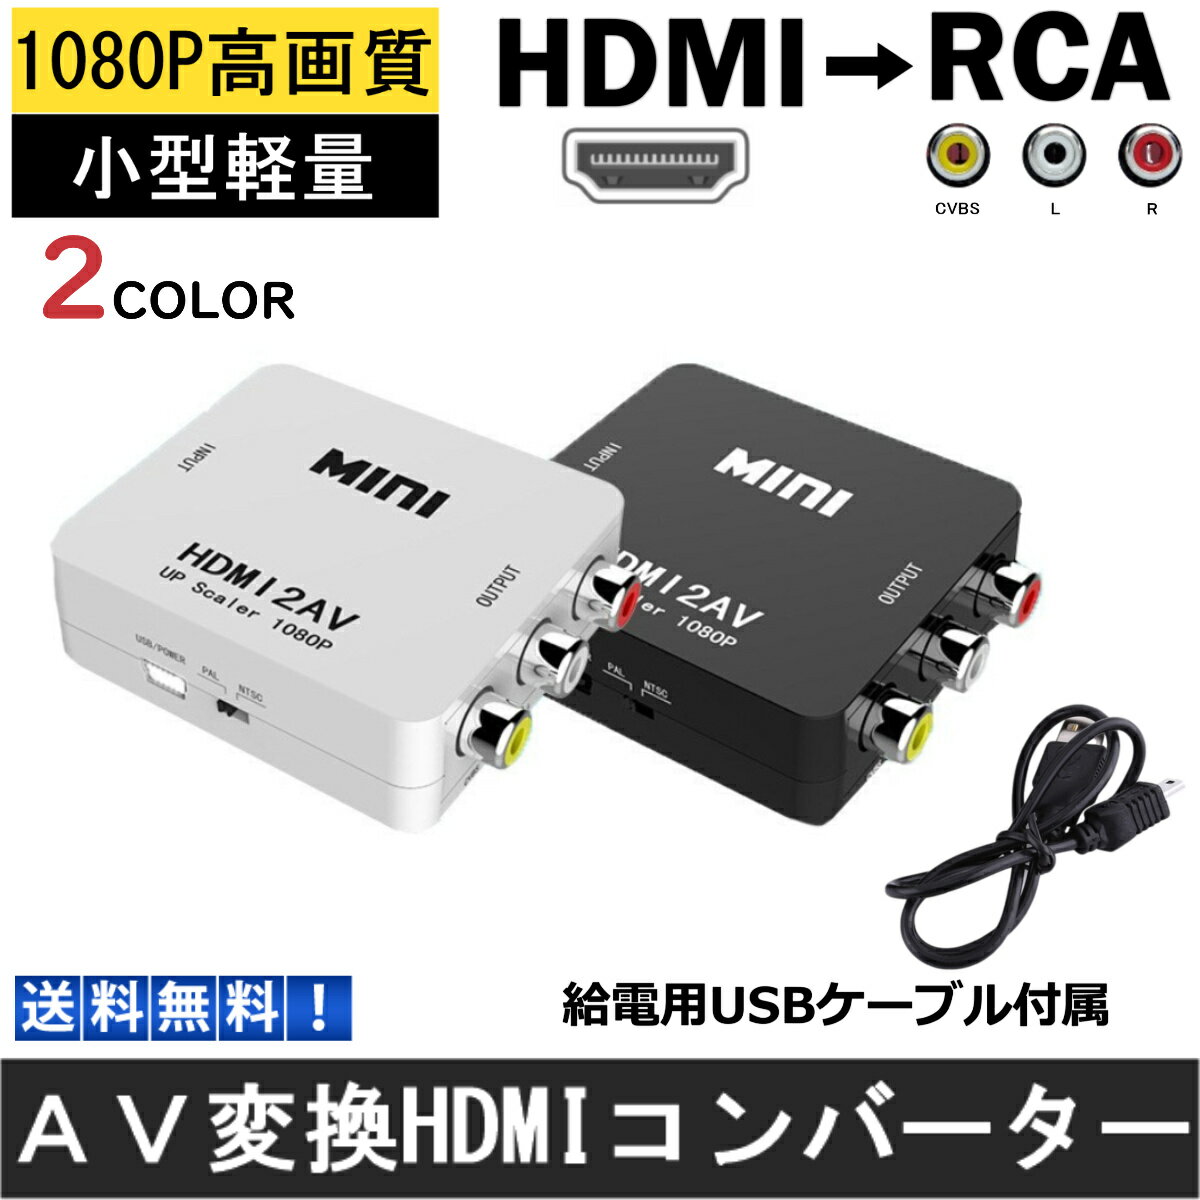 HDMI RCA 変換器 切替器 変換 給電用USB